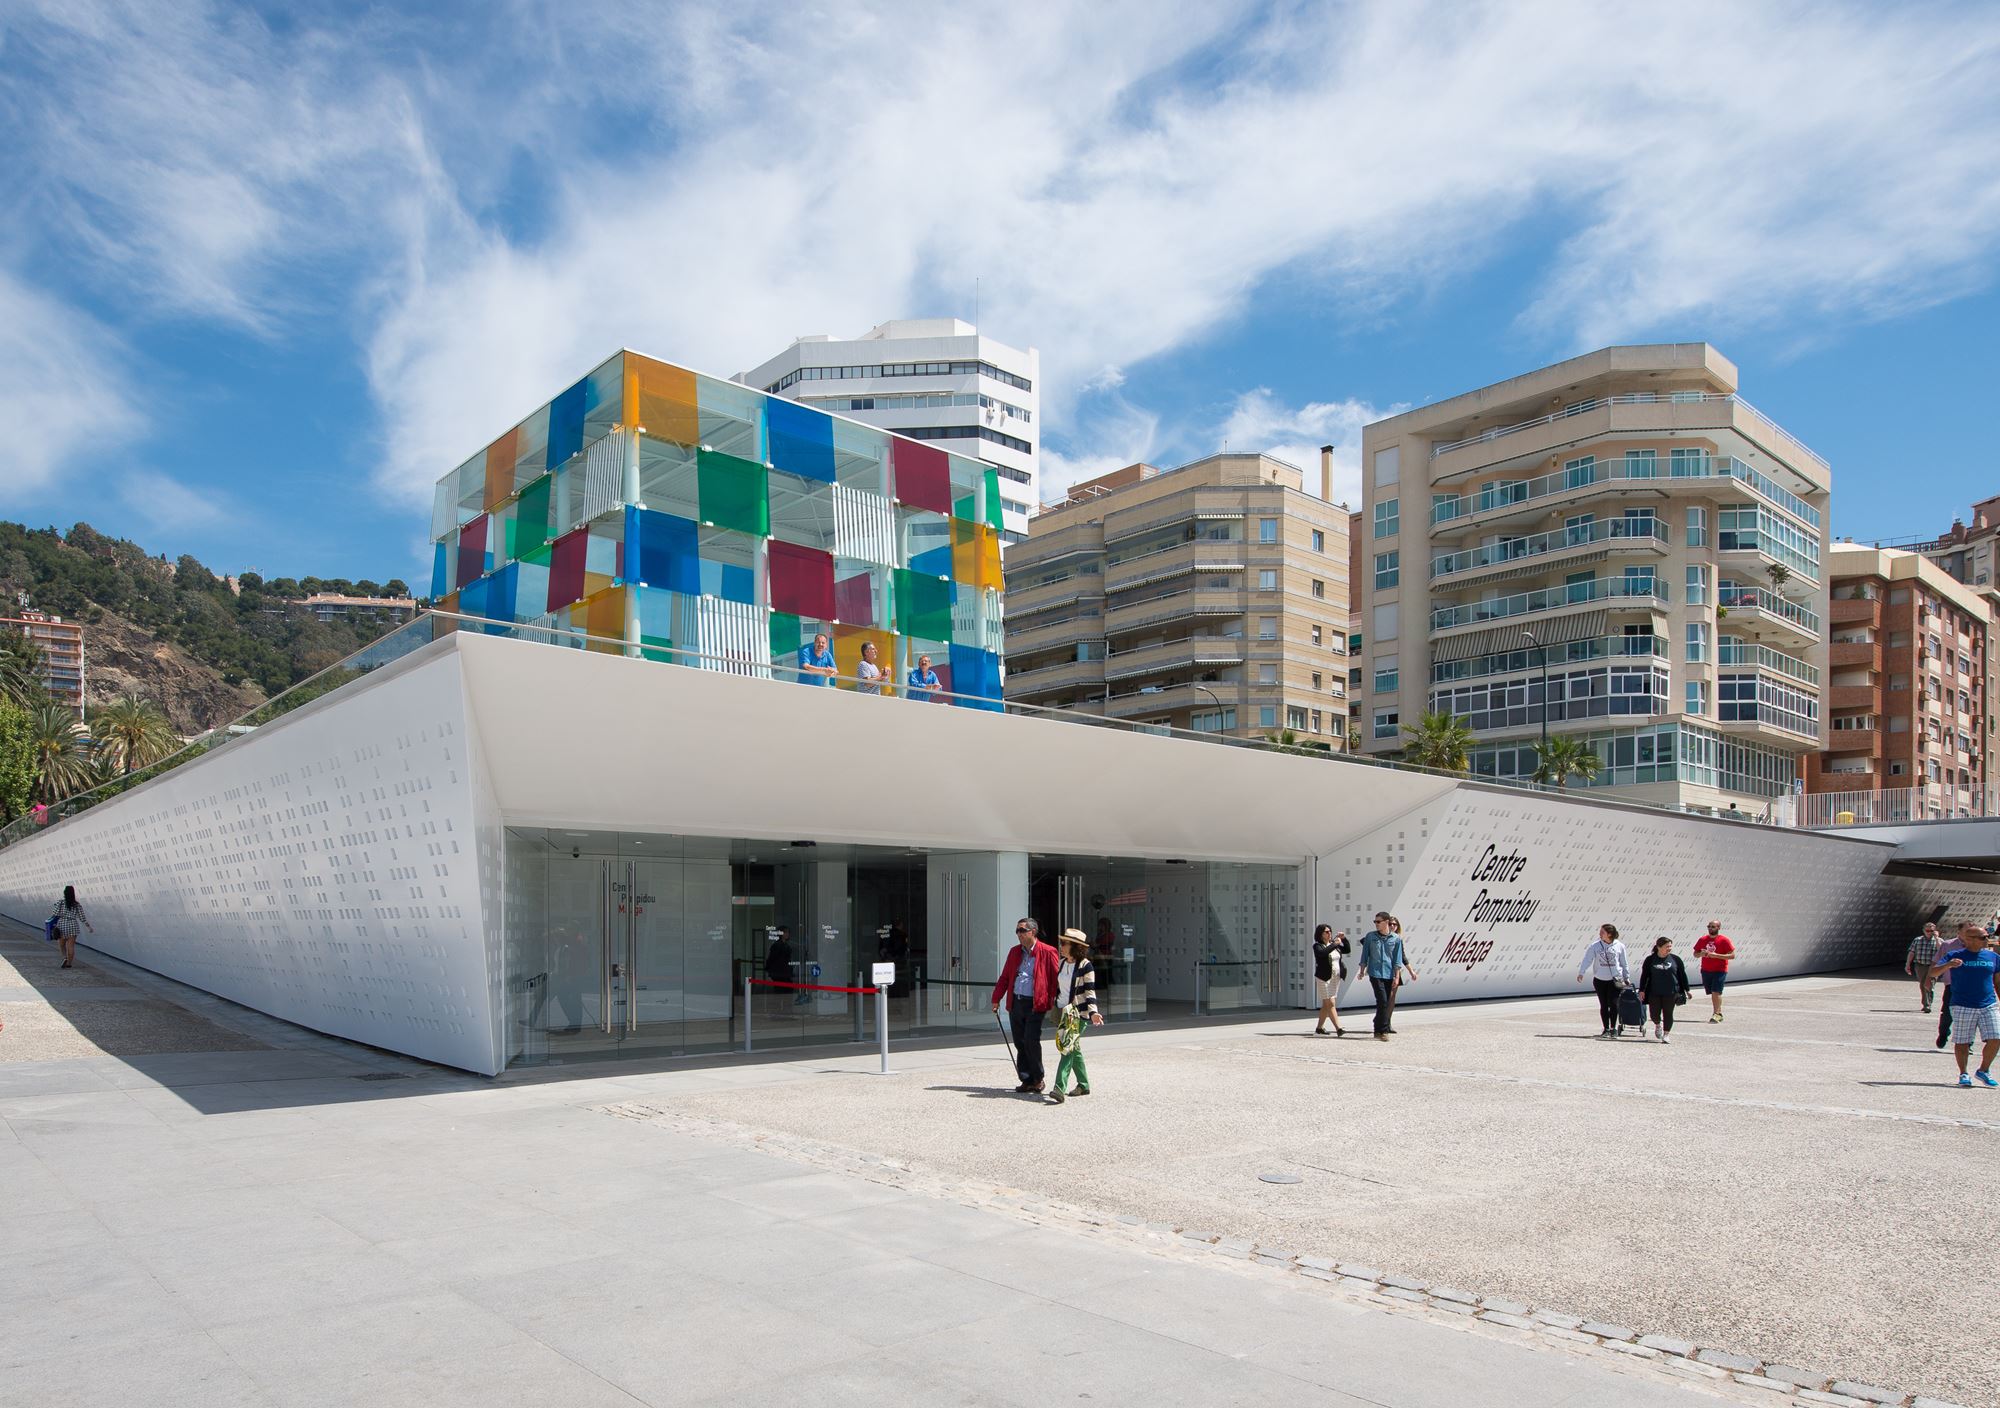 comprar online Málaga Museum Experience